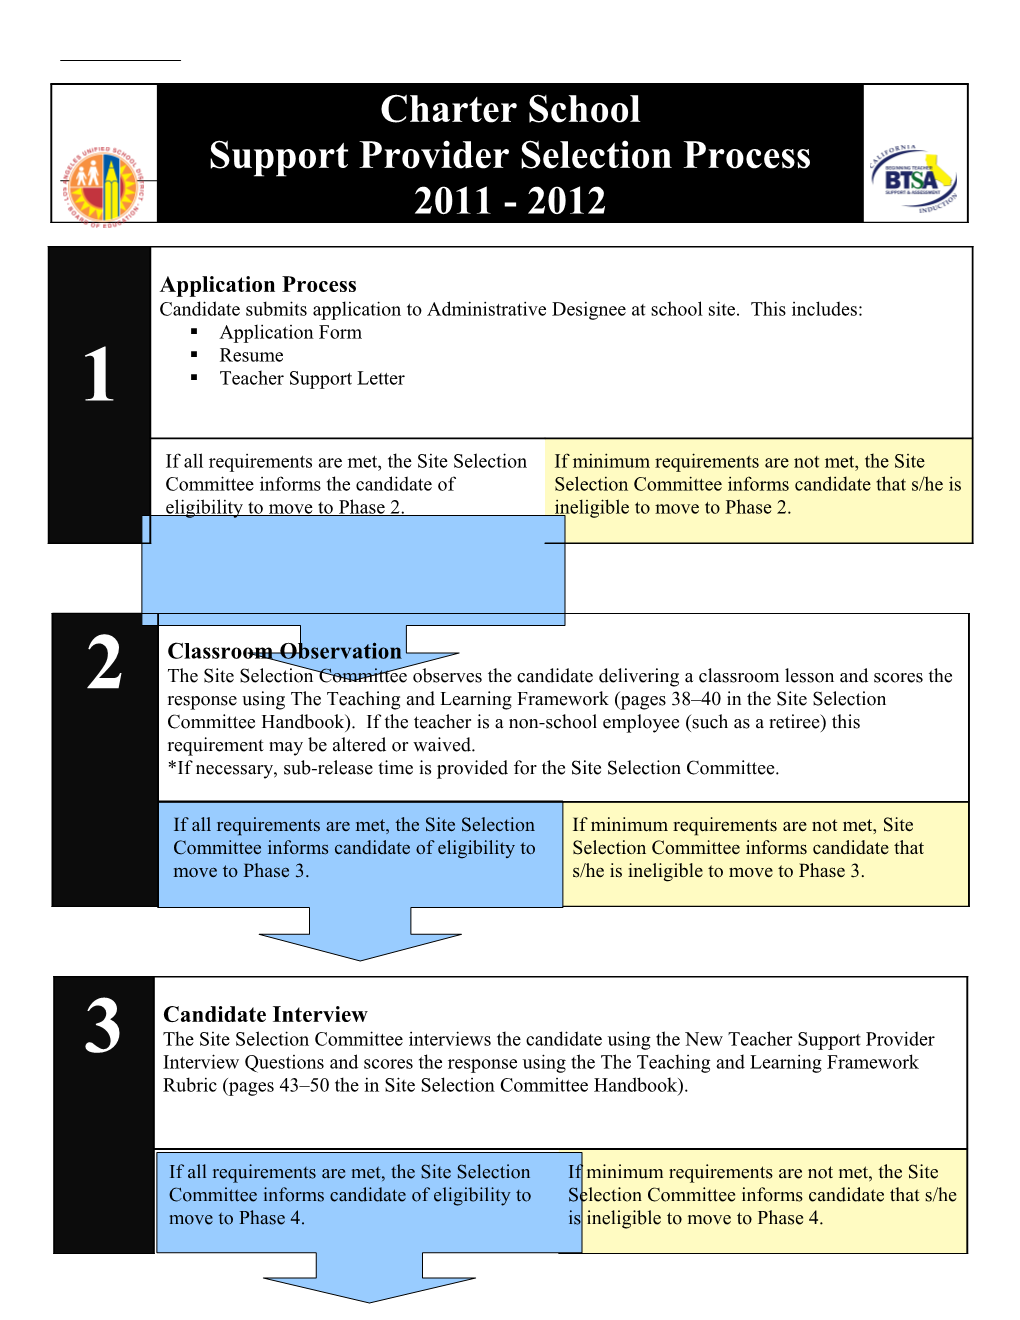 Support Provider Process Flowchart